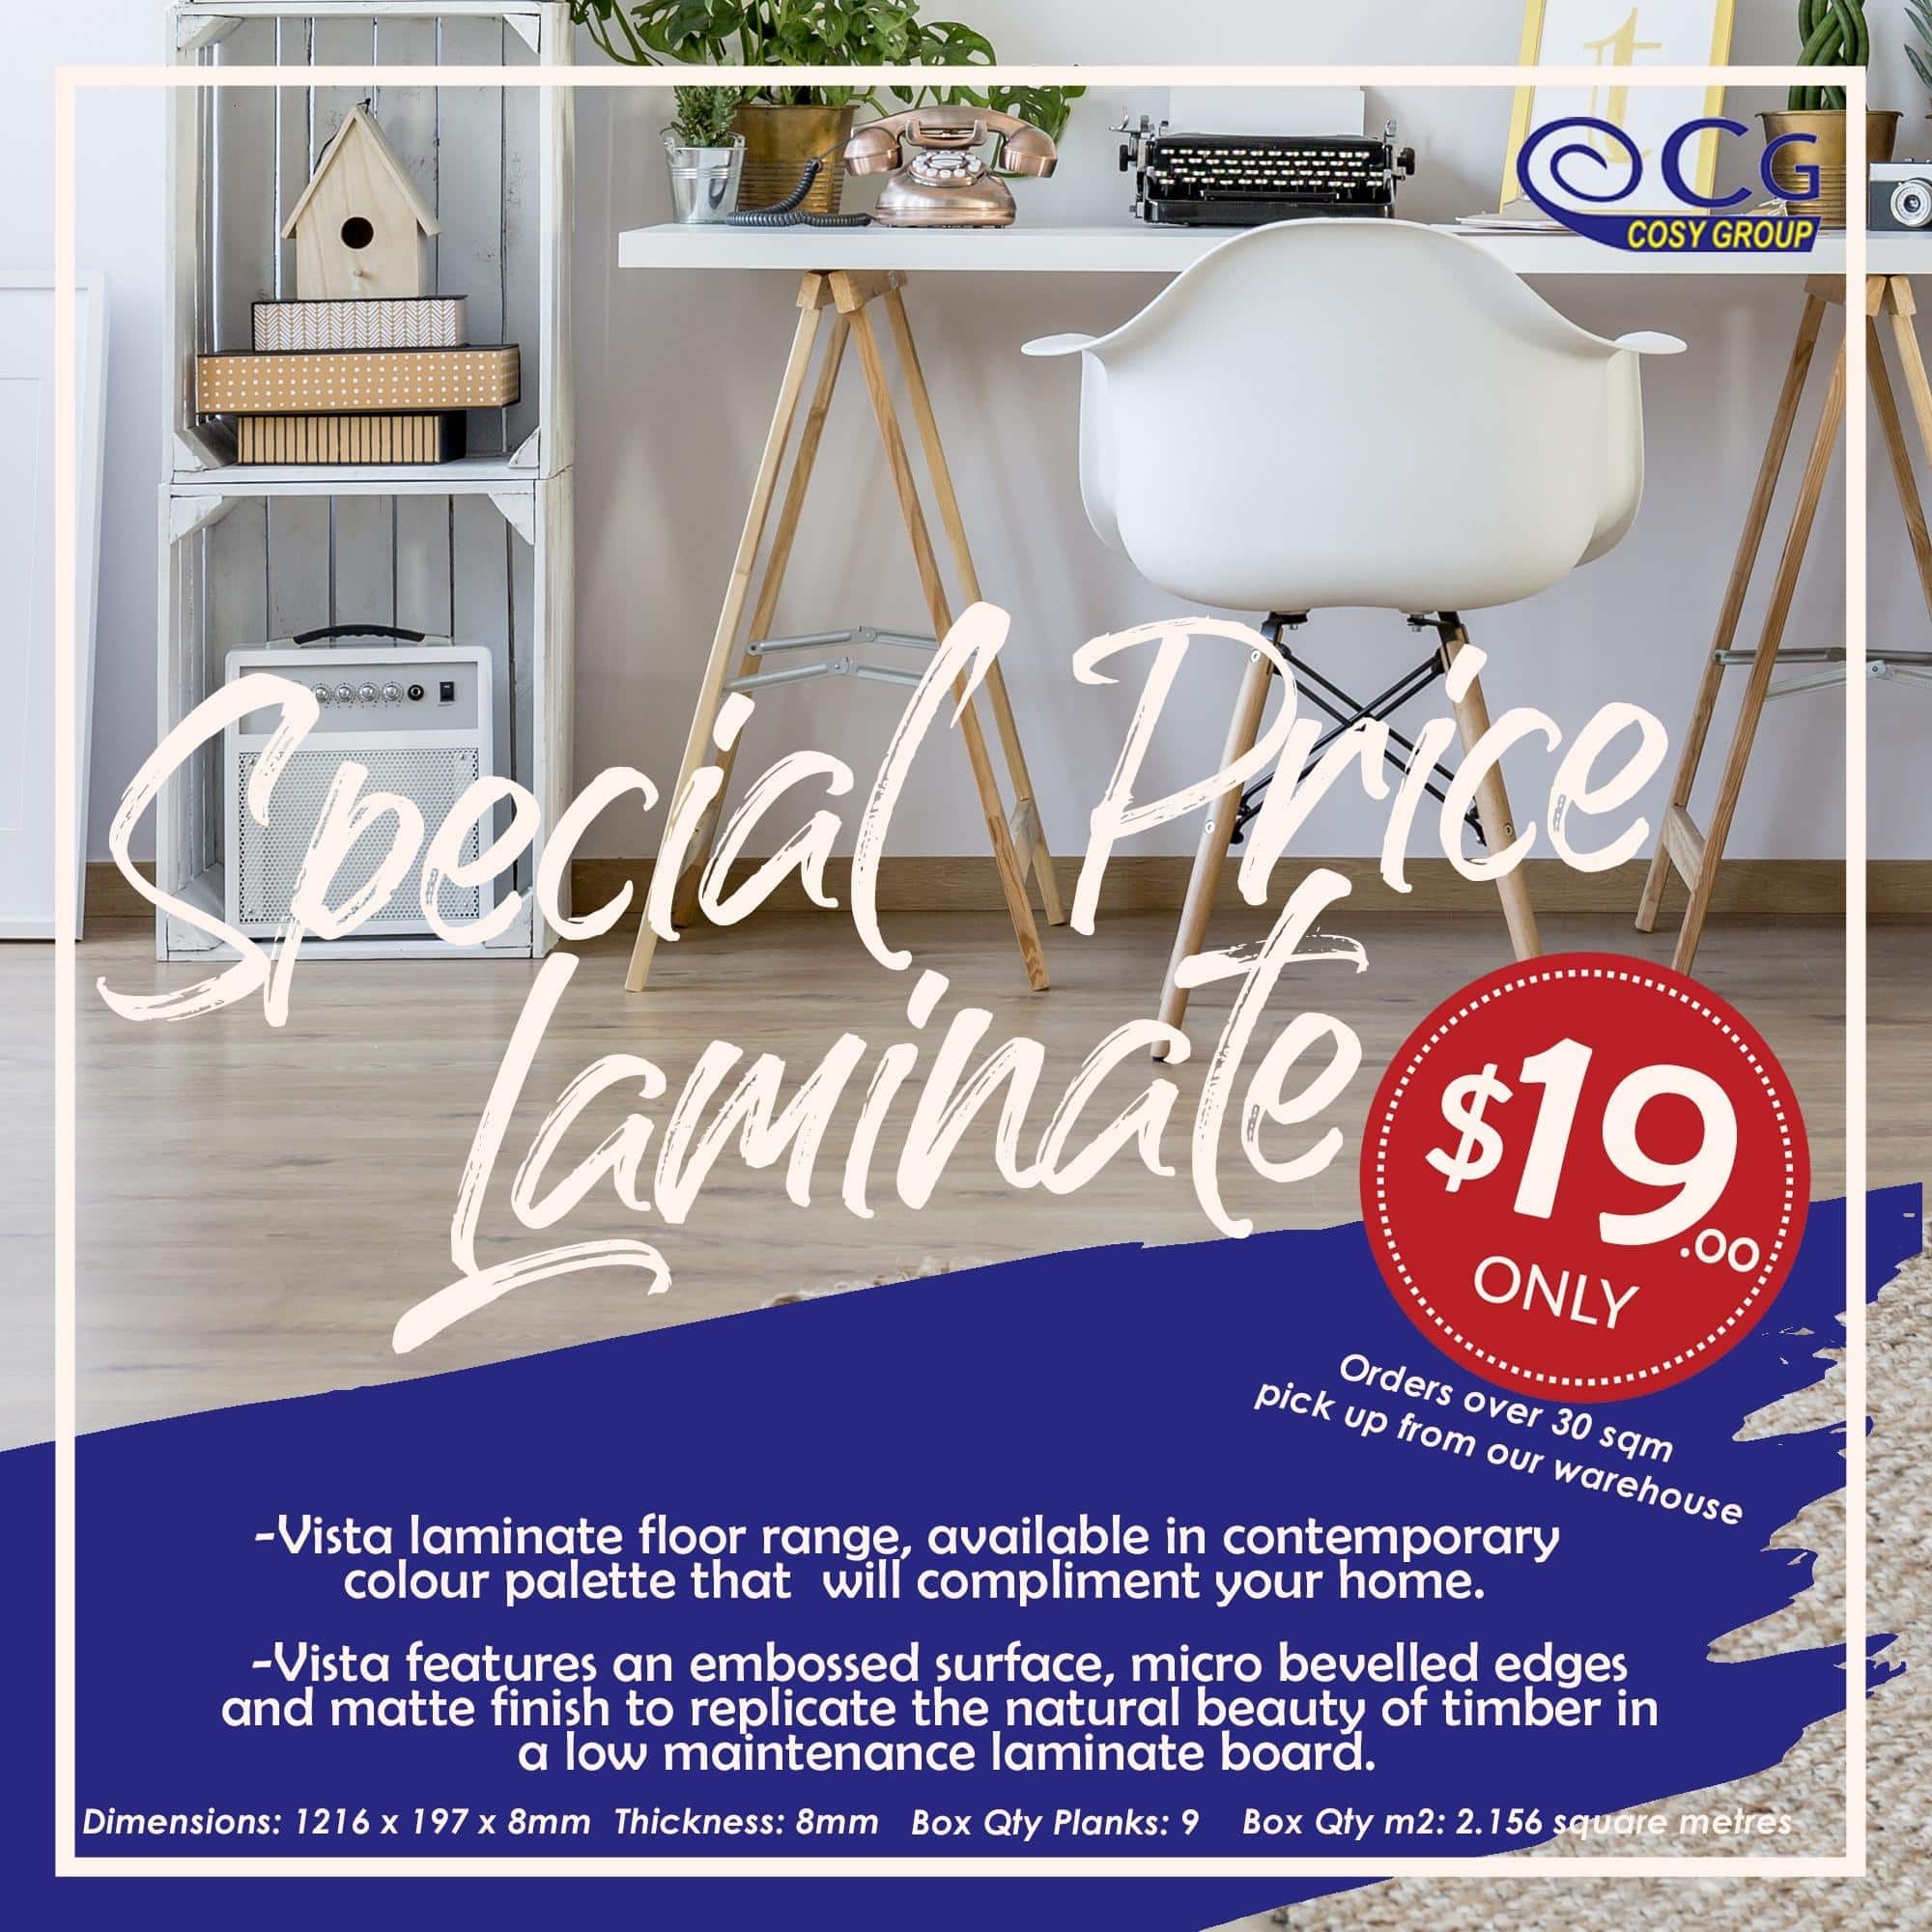 Image presents Special Price Laminate